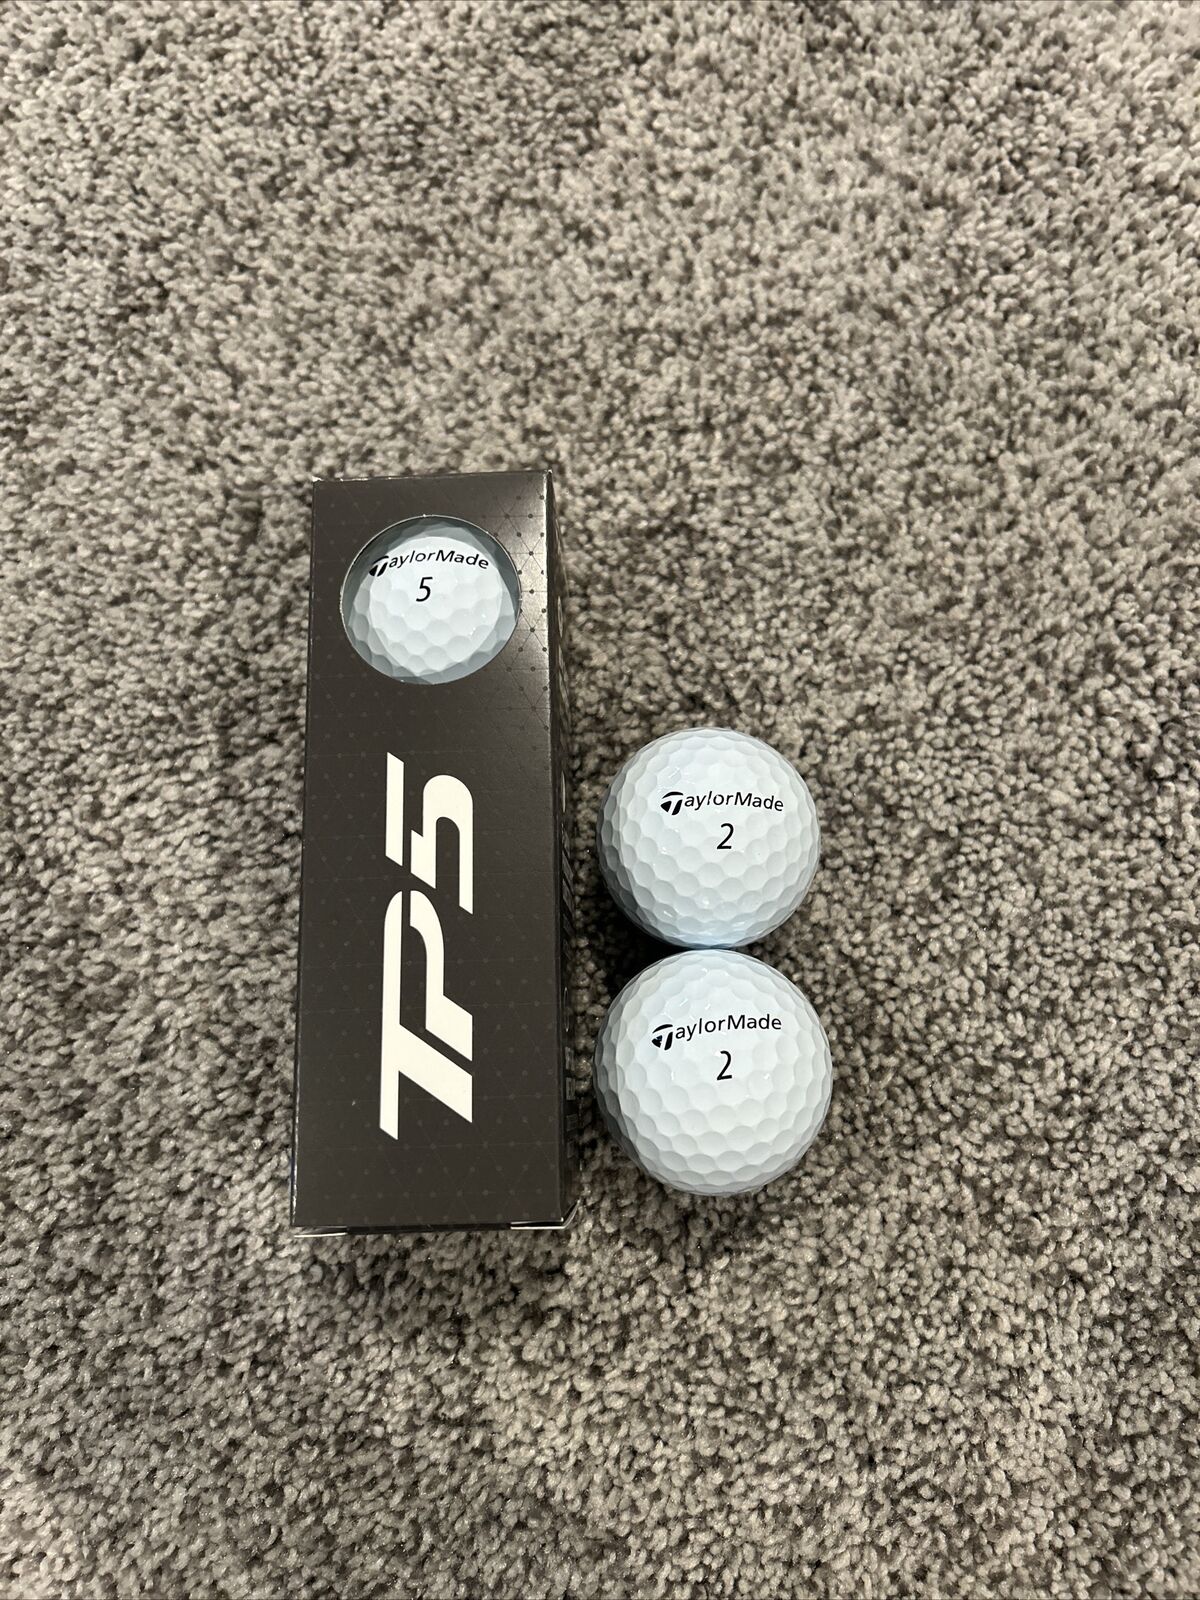 taylormade tp5 golf balls new 3 pack